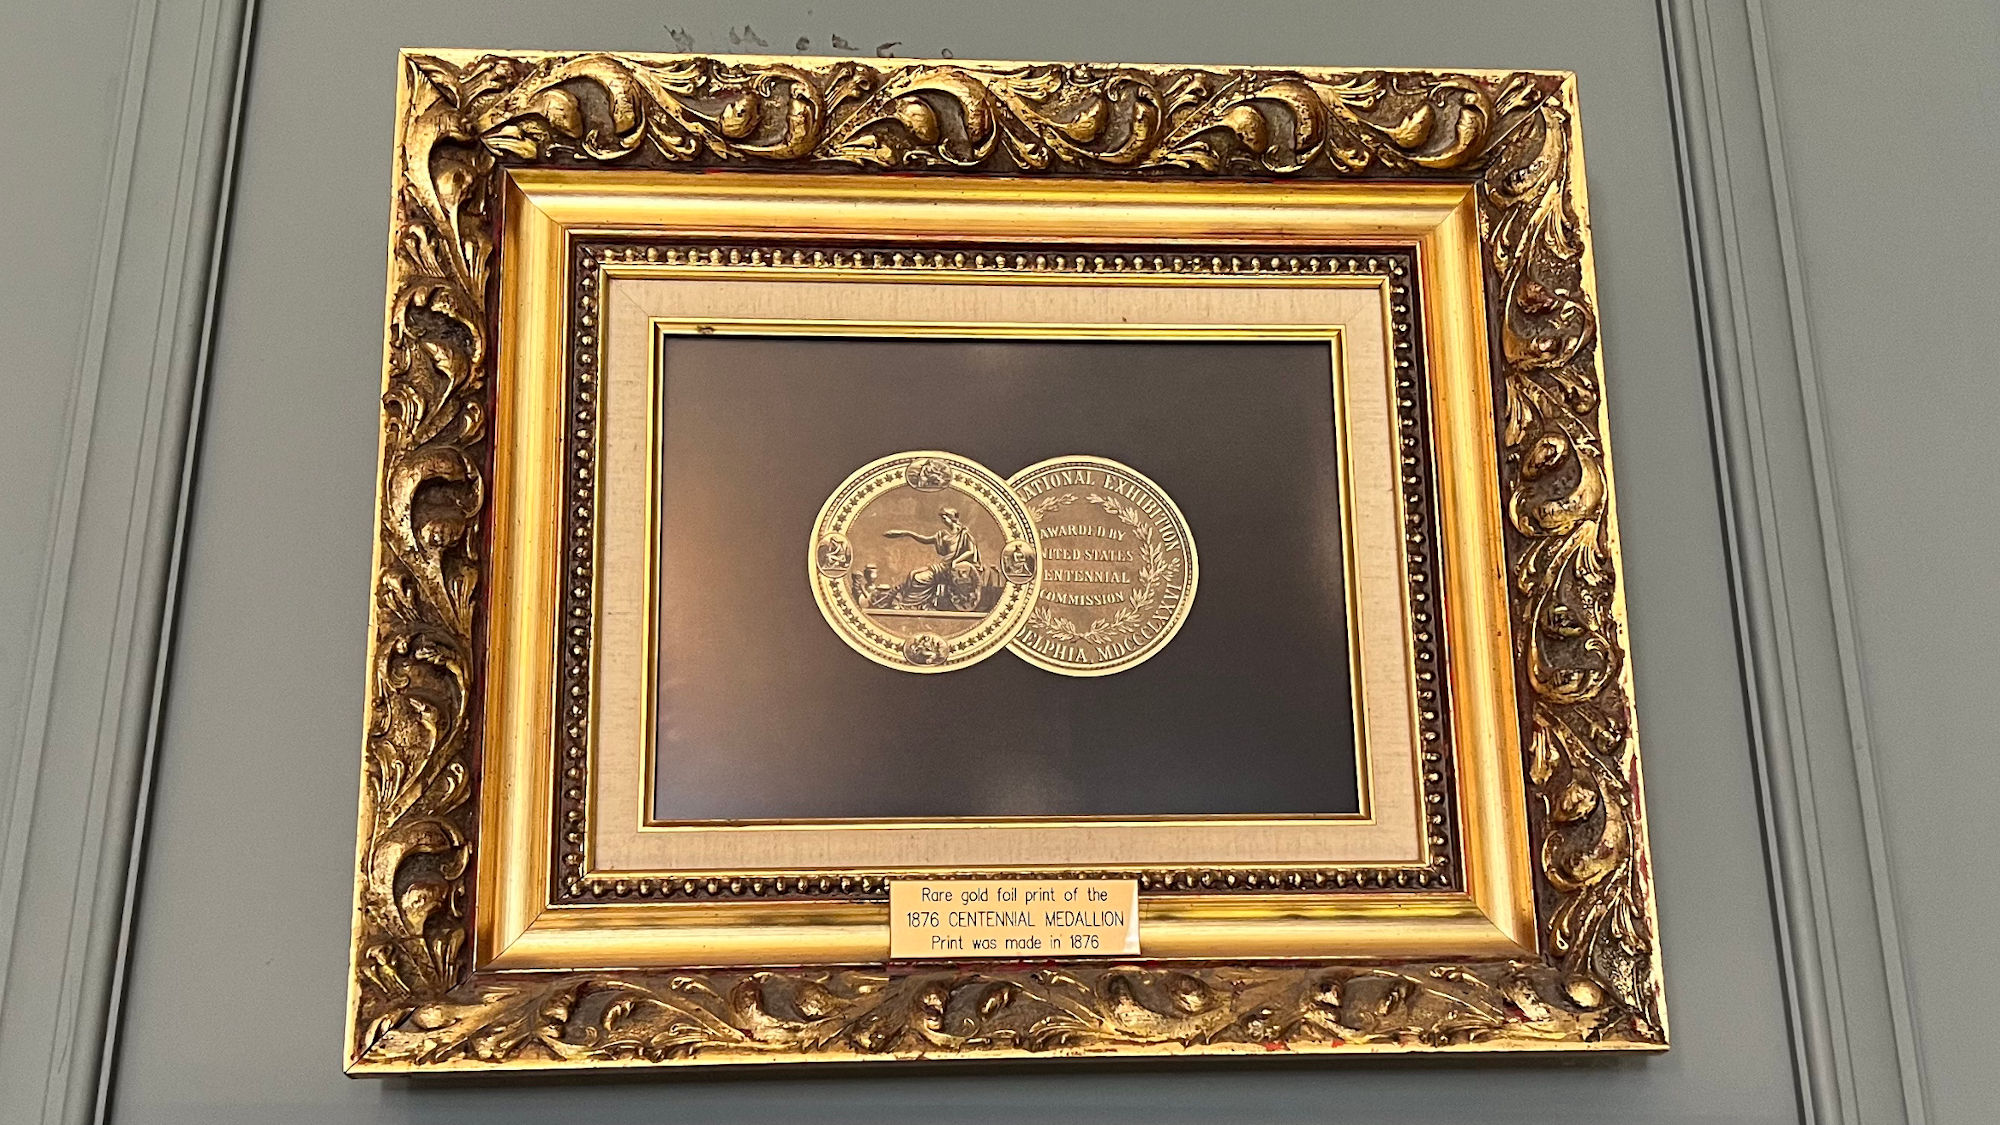 Independence Hall Museum 1876 Centennial Medallion